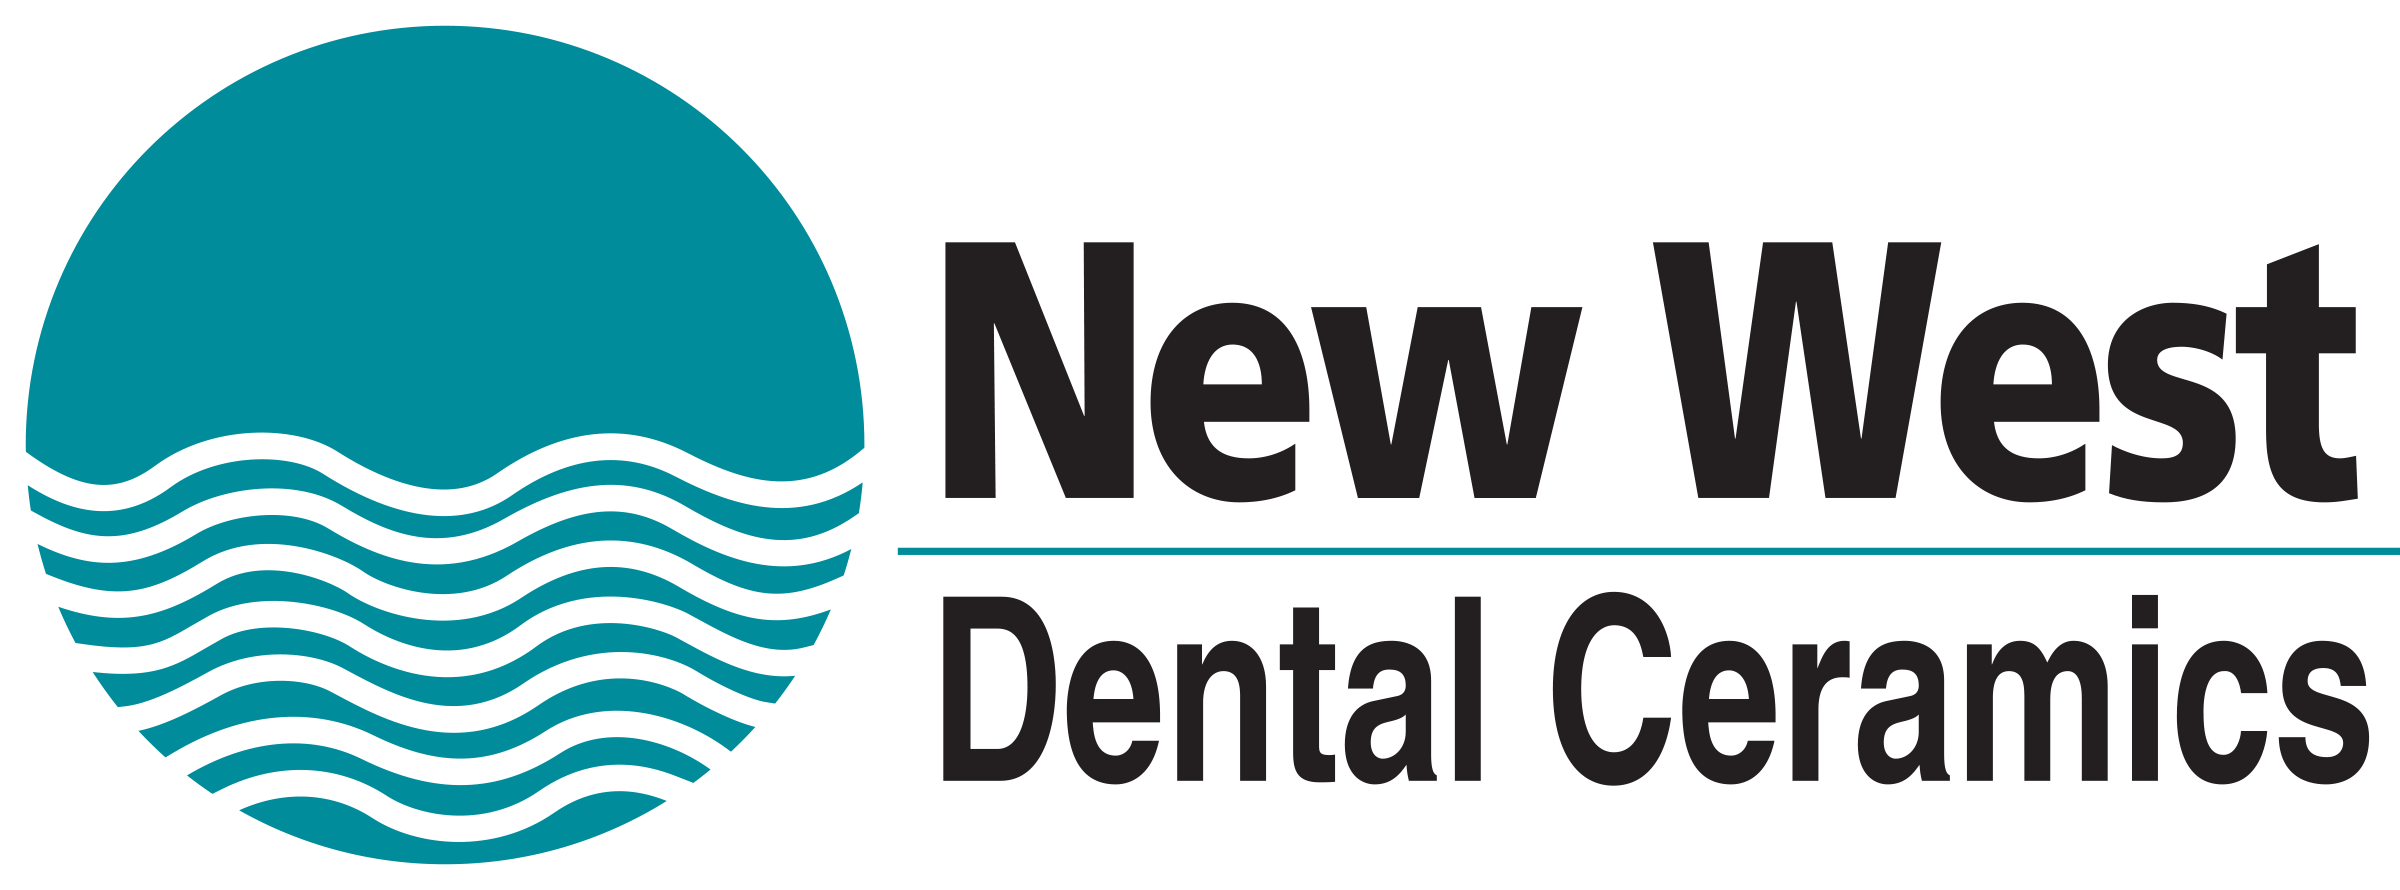 logo New West Dental Ceramics - Dental Lab Services